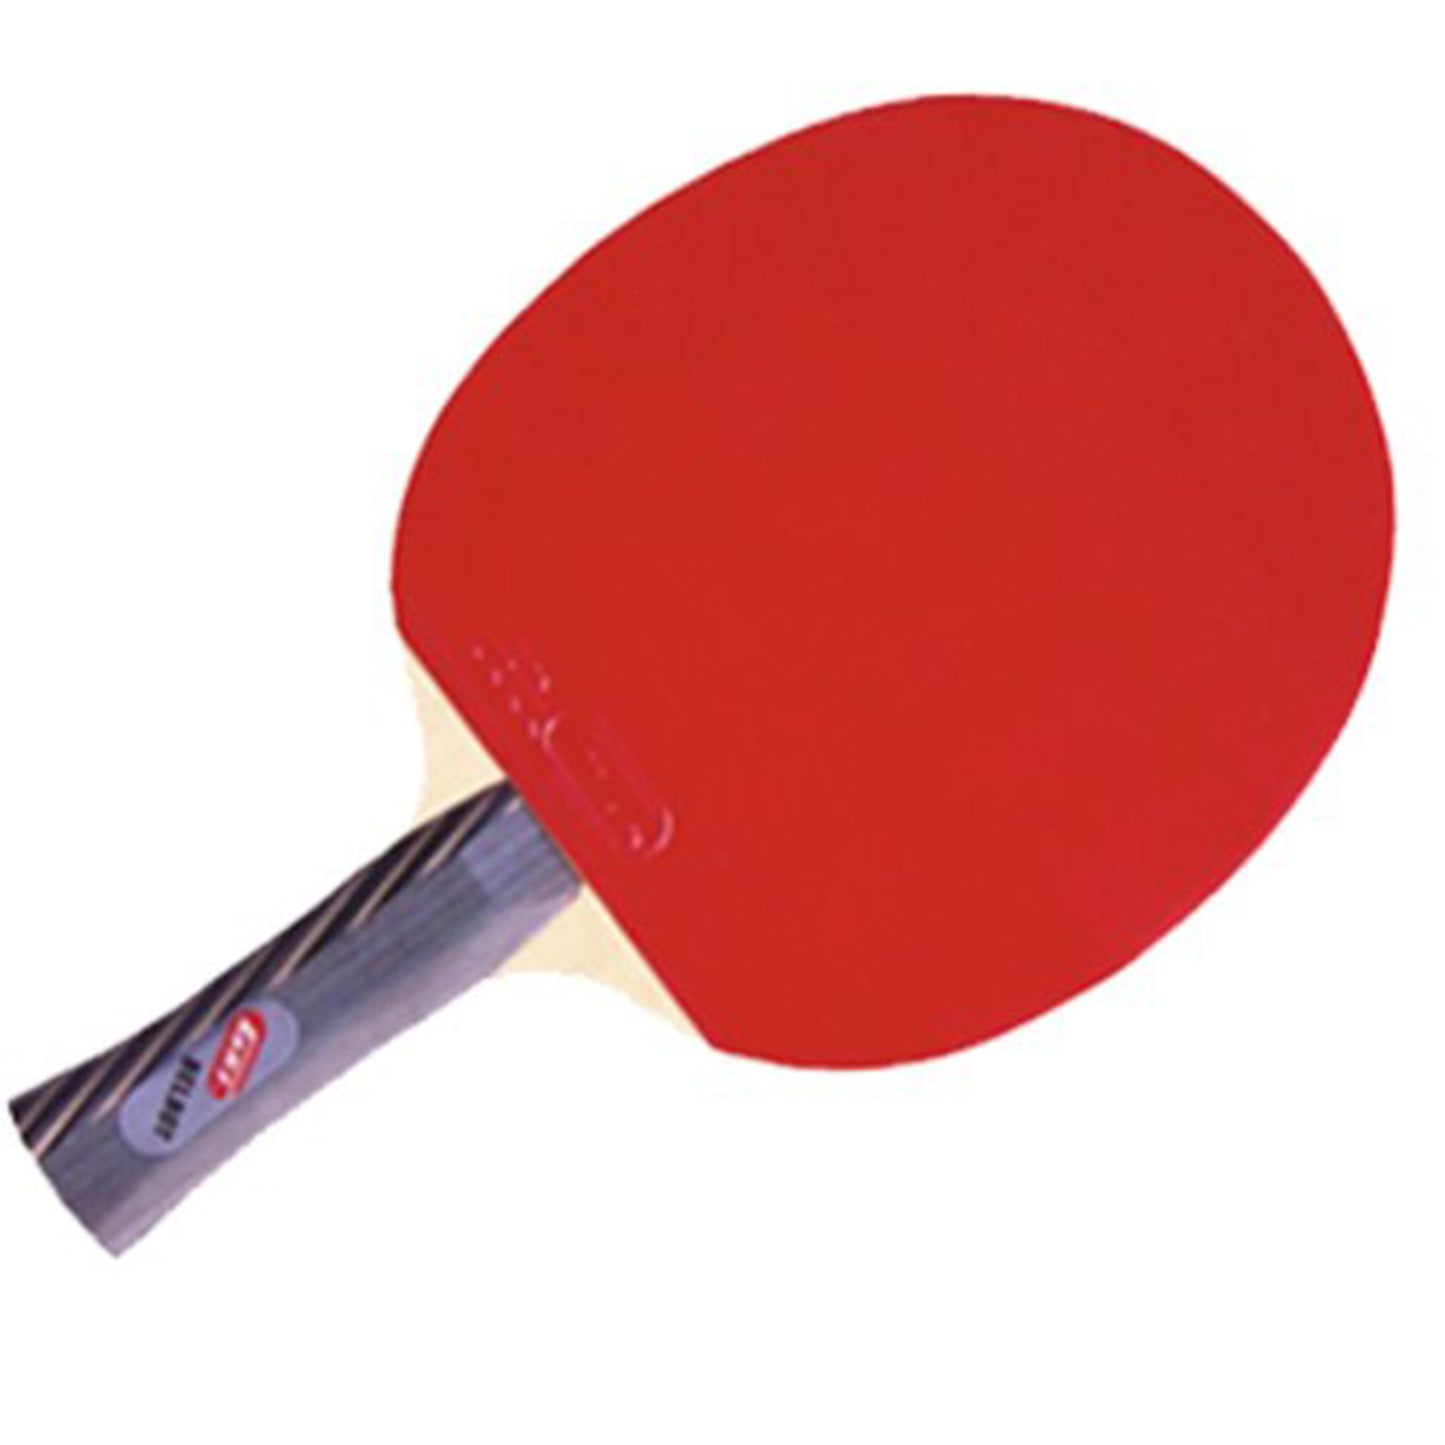 GKI Belbot Table Tennis Racquet - Best Price online Prokicksports.com